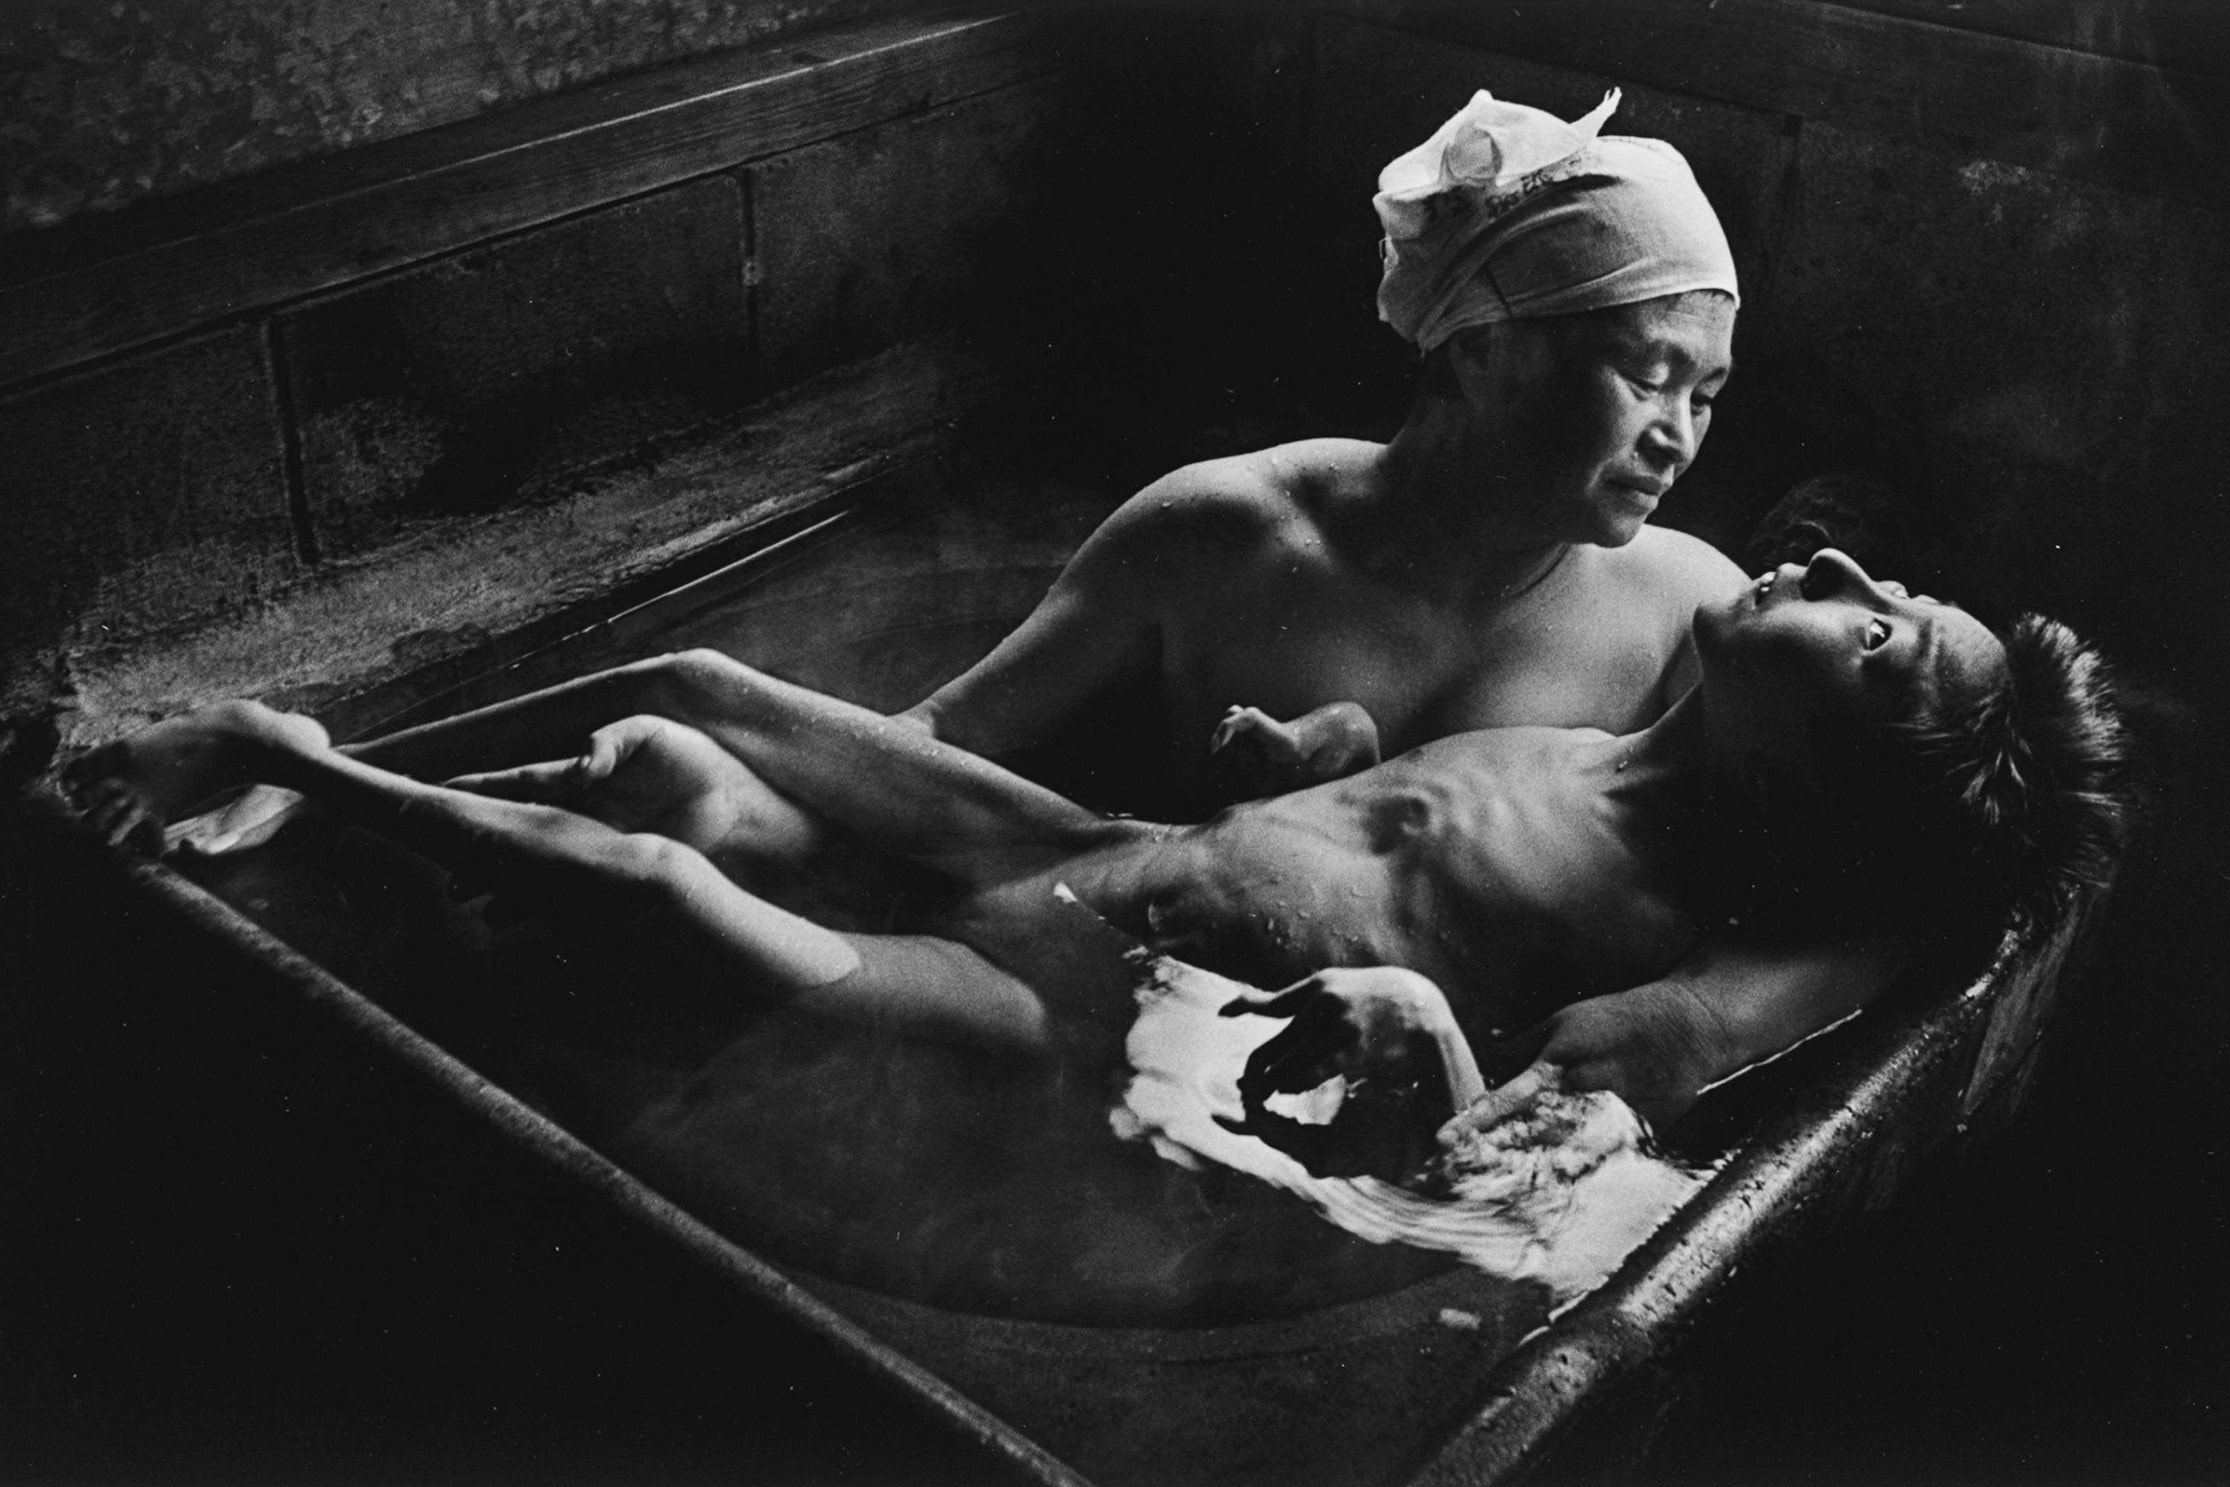 masters of photography w. eugene smith tomoko uemura in her bath minamata japan 1972